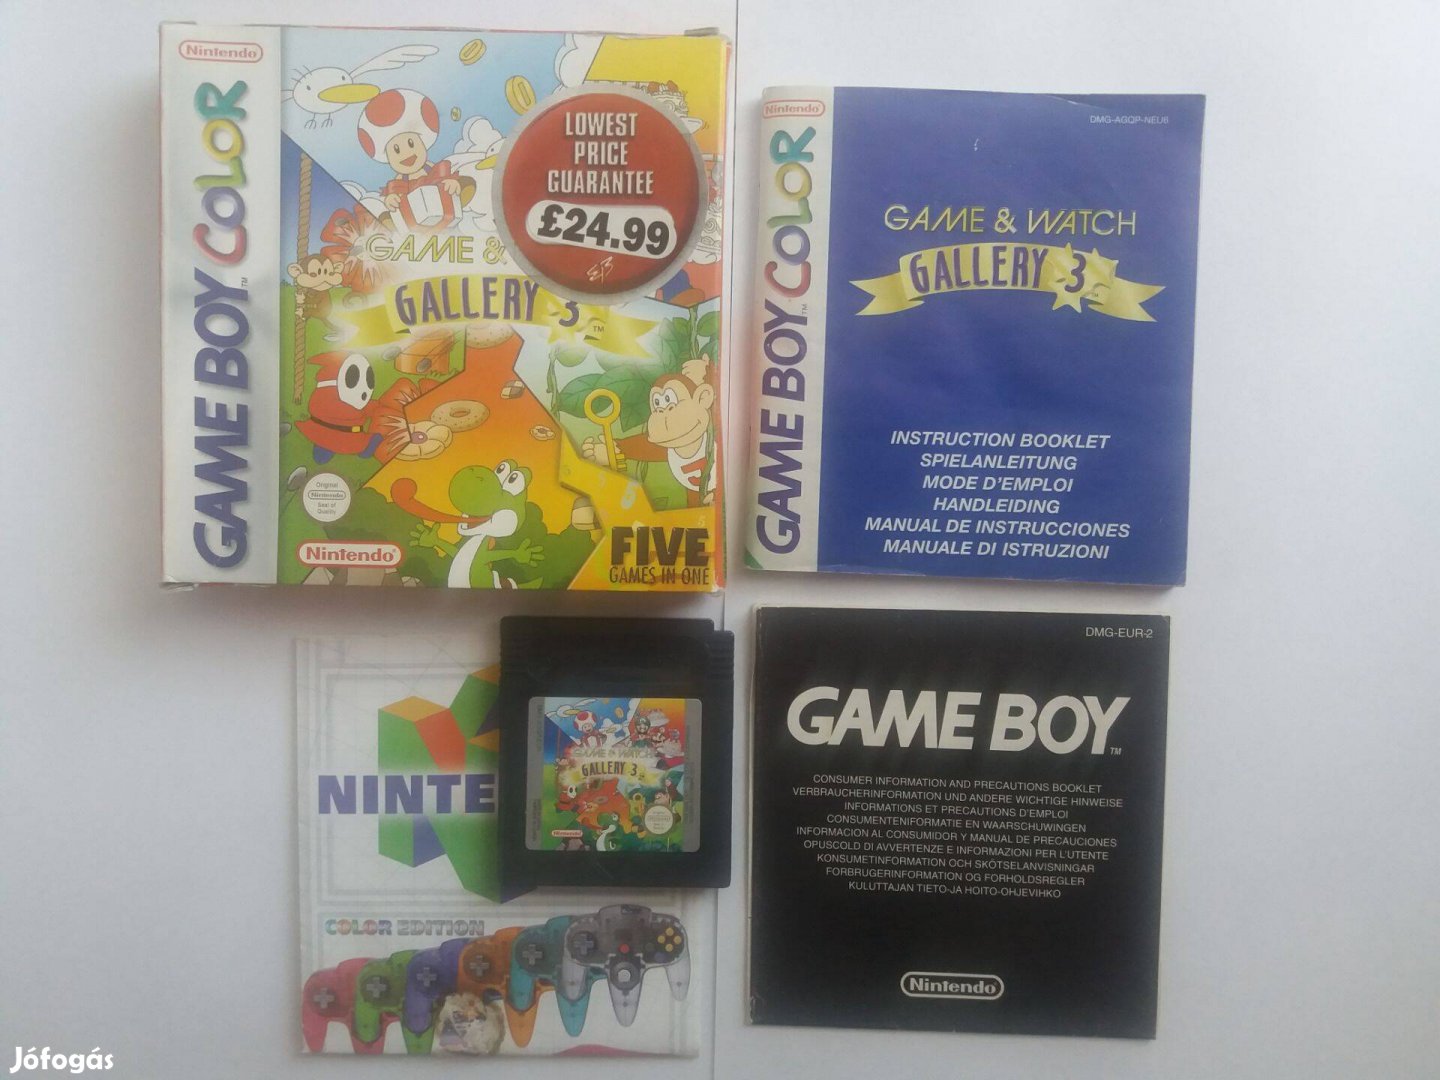 Gameboy Game and Watch Gallery 3 Game Boy játék ajándék tokban